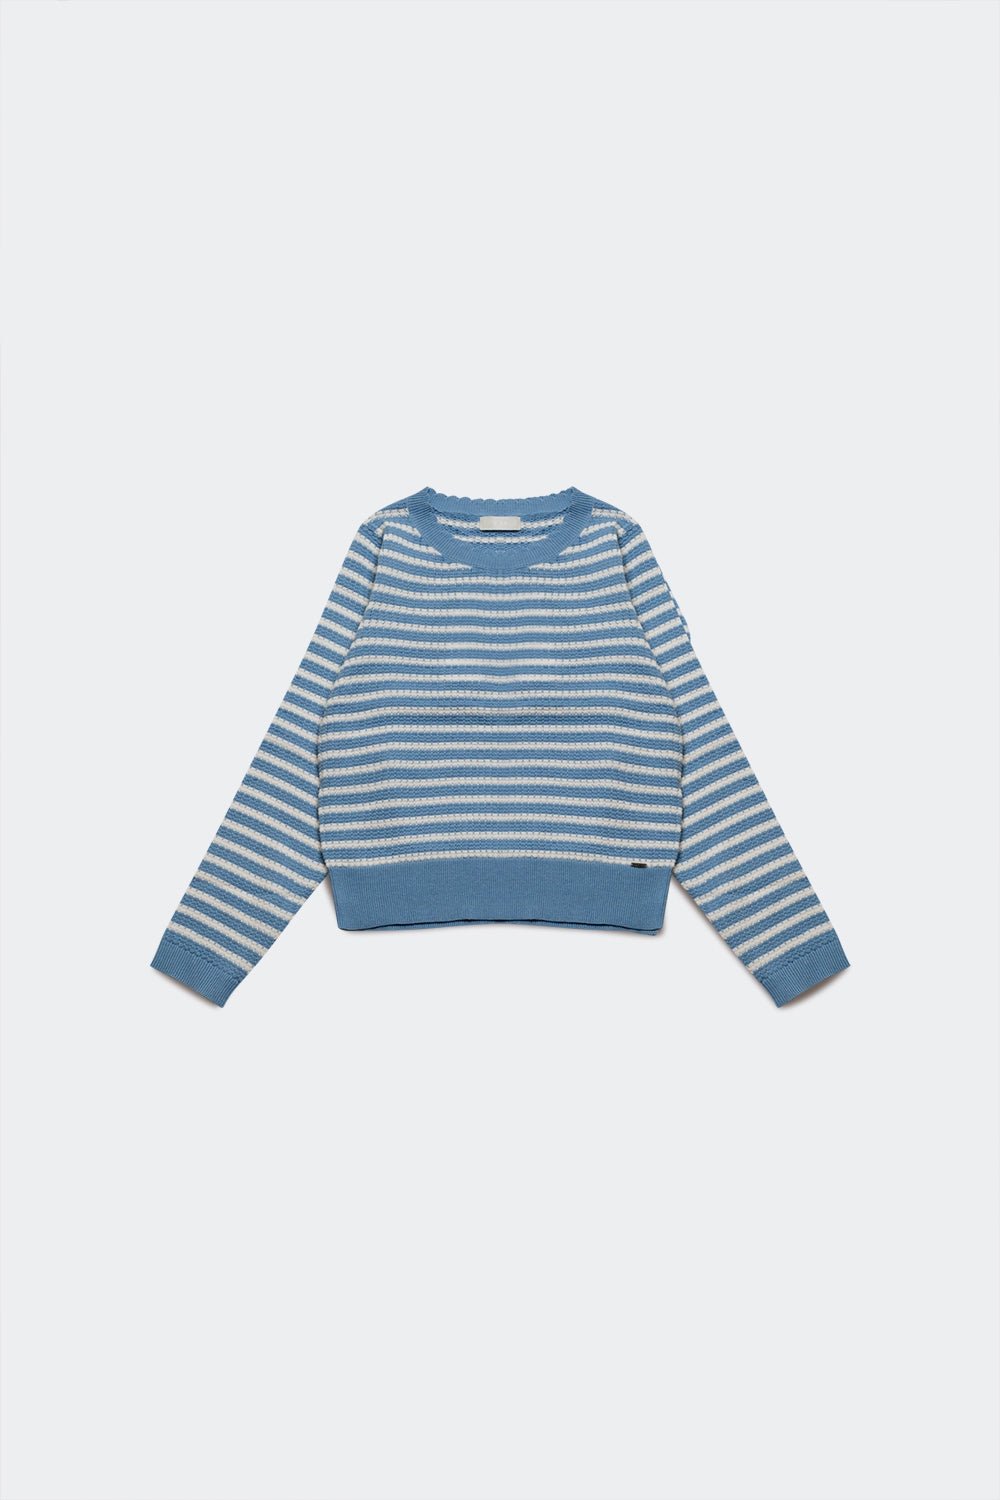 Blue Striped Sweater With Ruffled Trim - Mack & Harvie